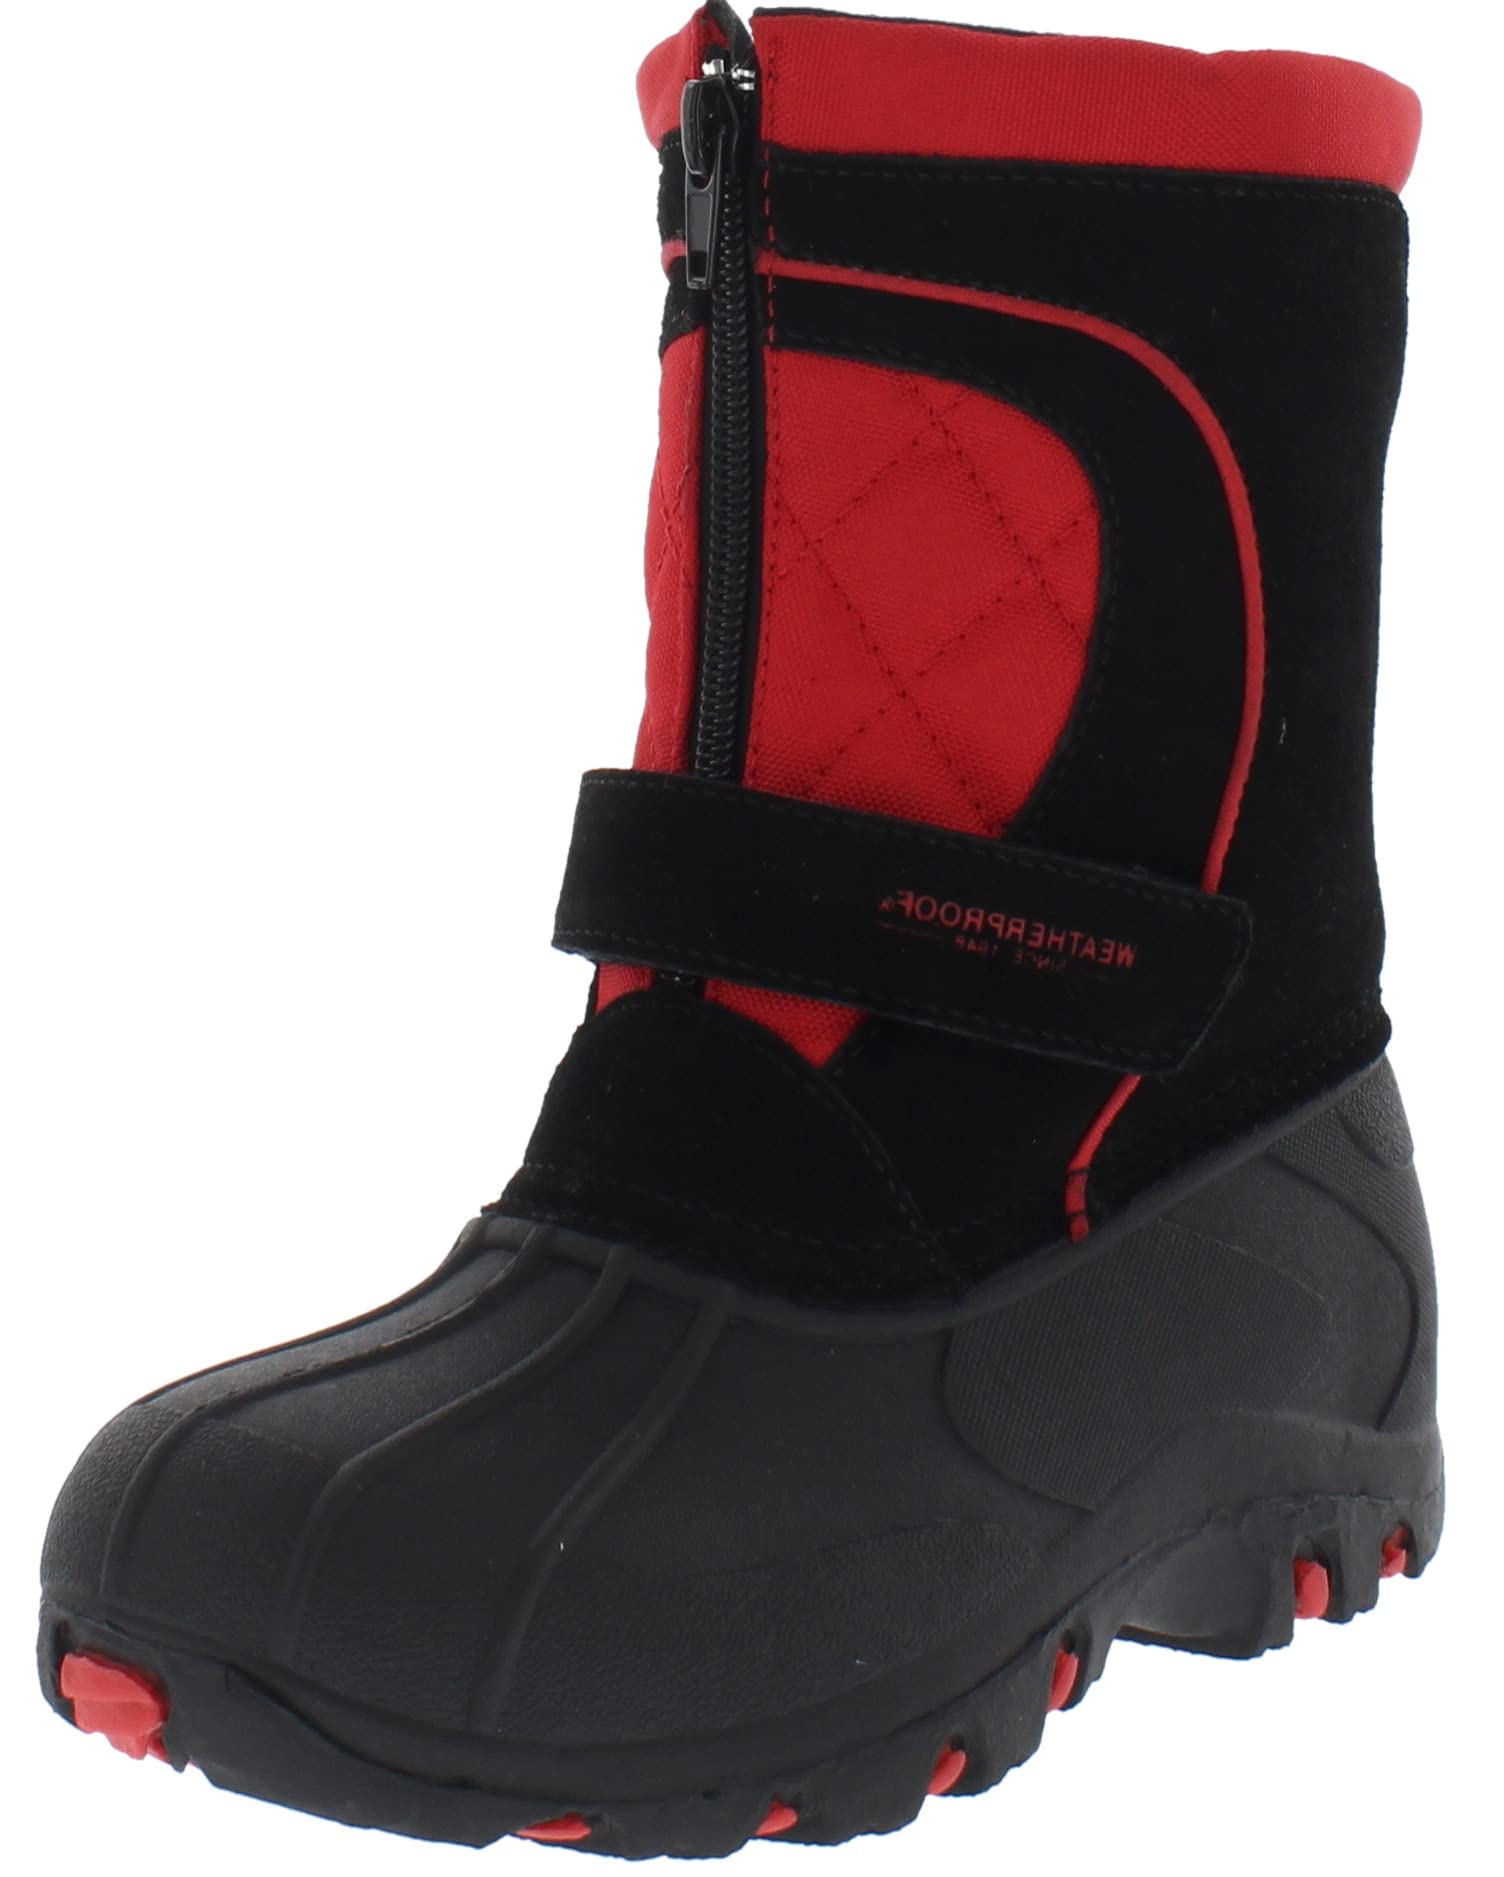 Weatherproof Kids Insulated Snow Winter Boots